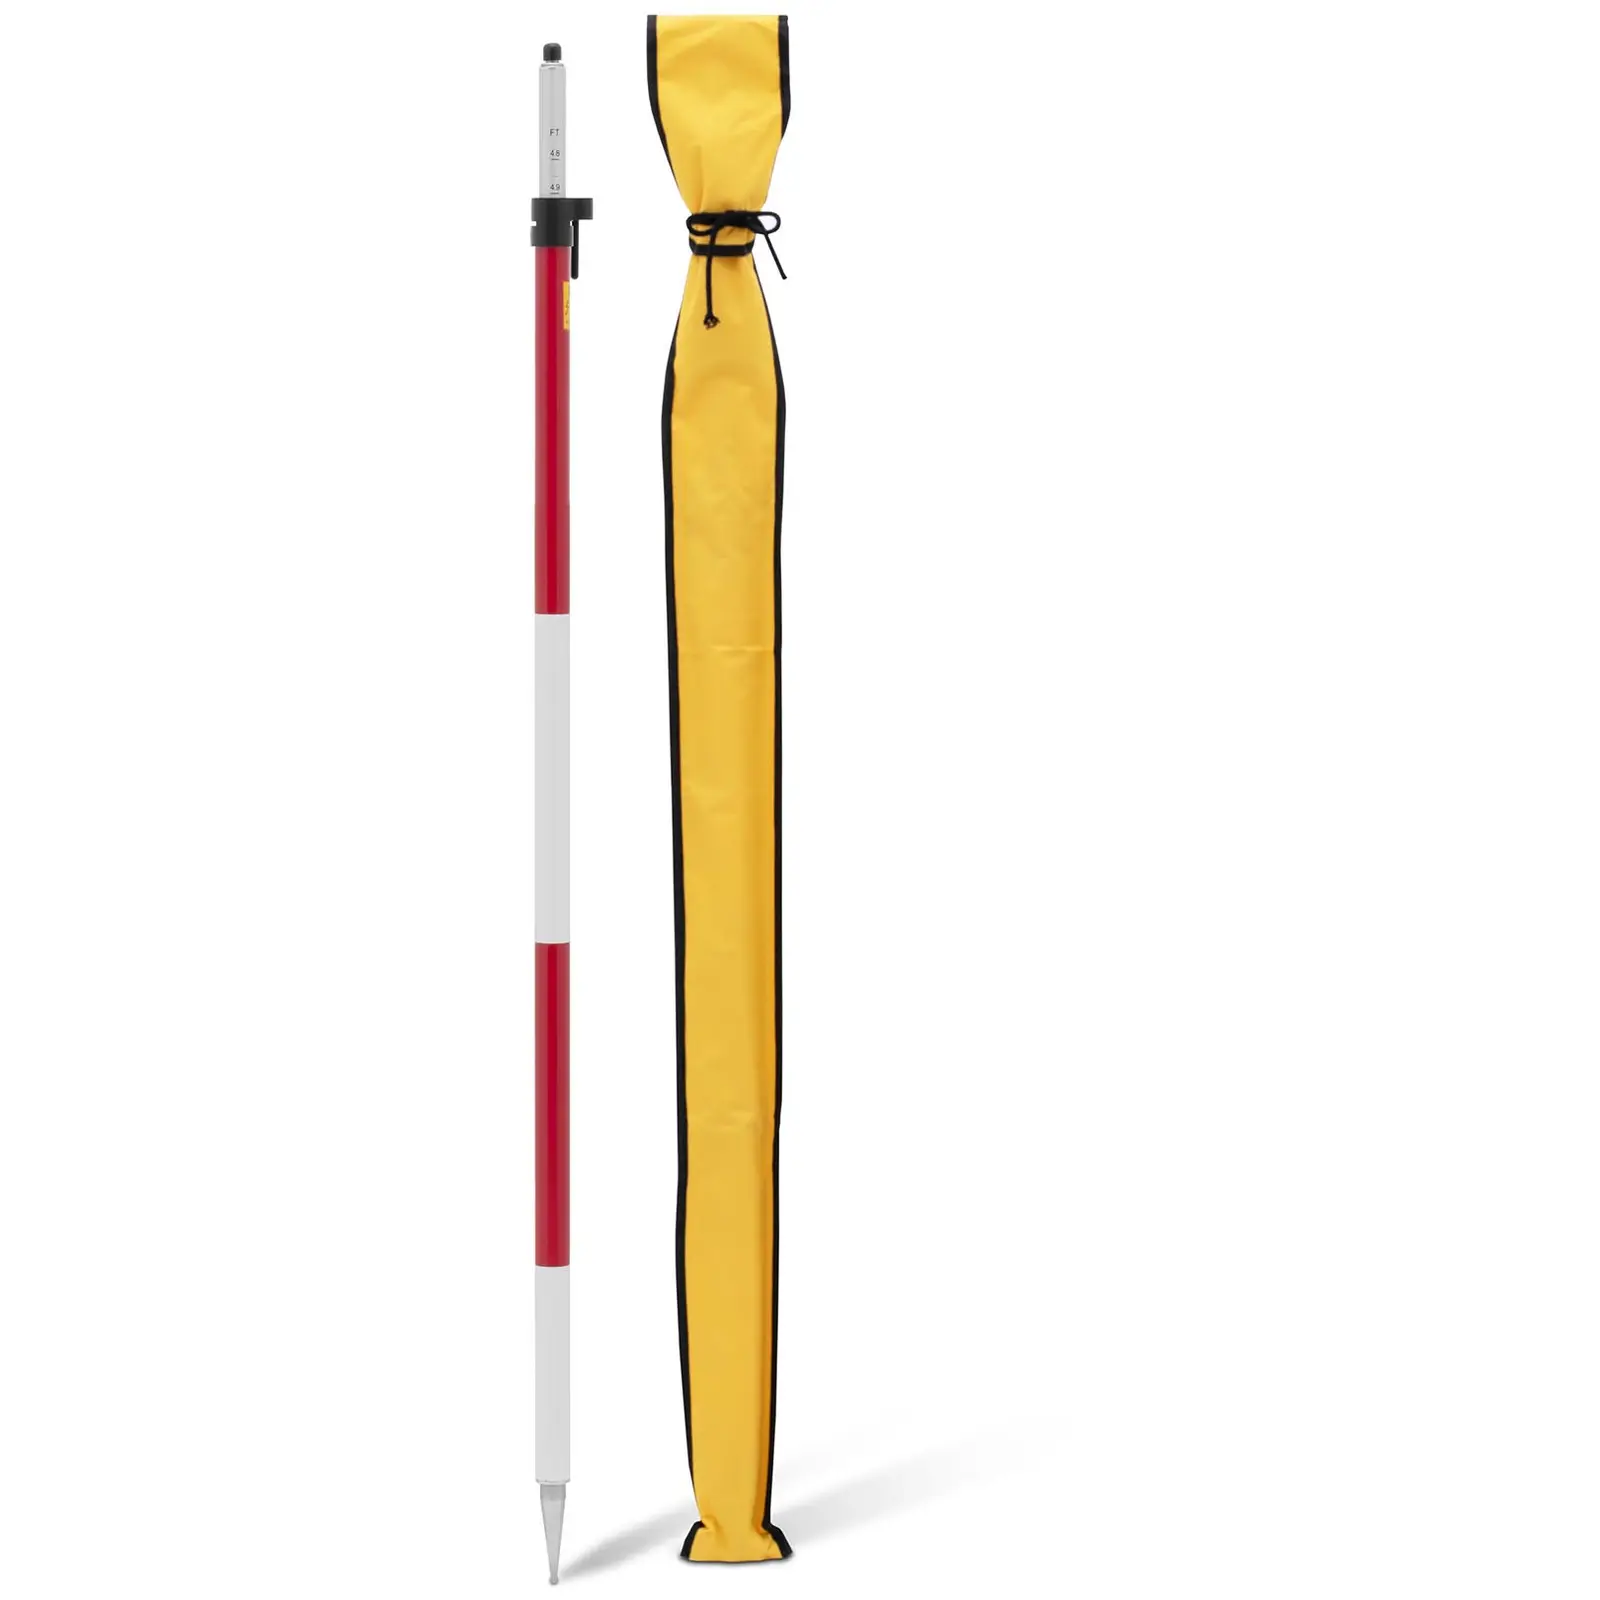 Prism Pole - 2.5 m